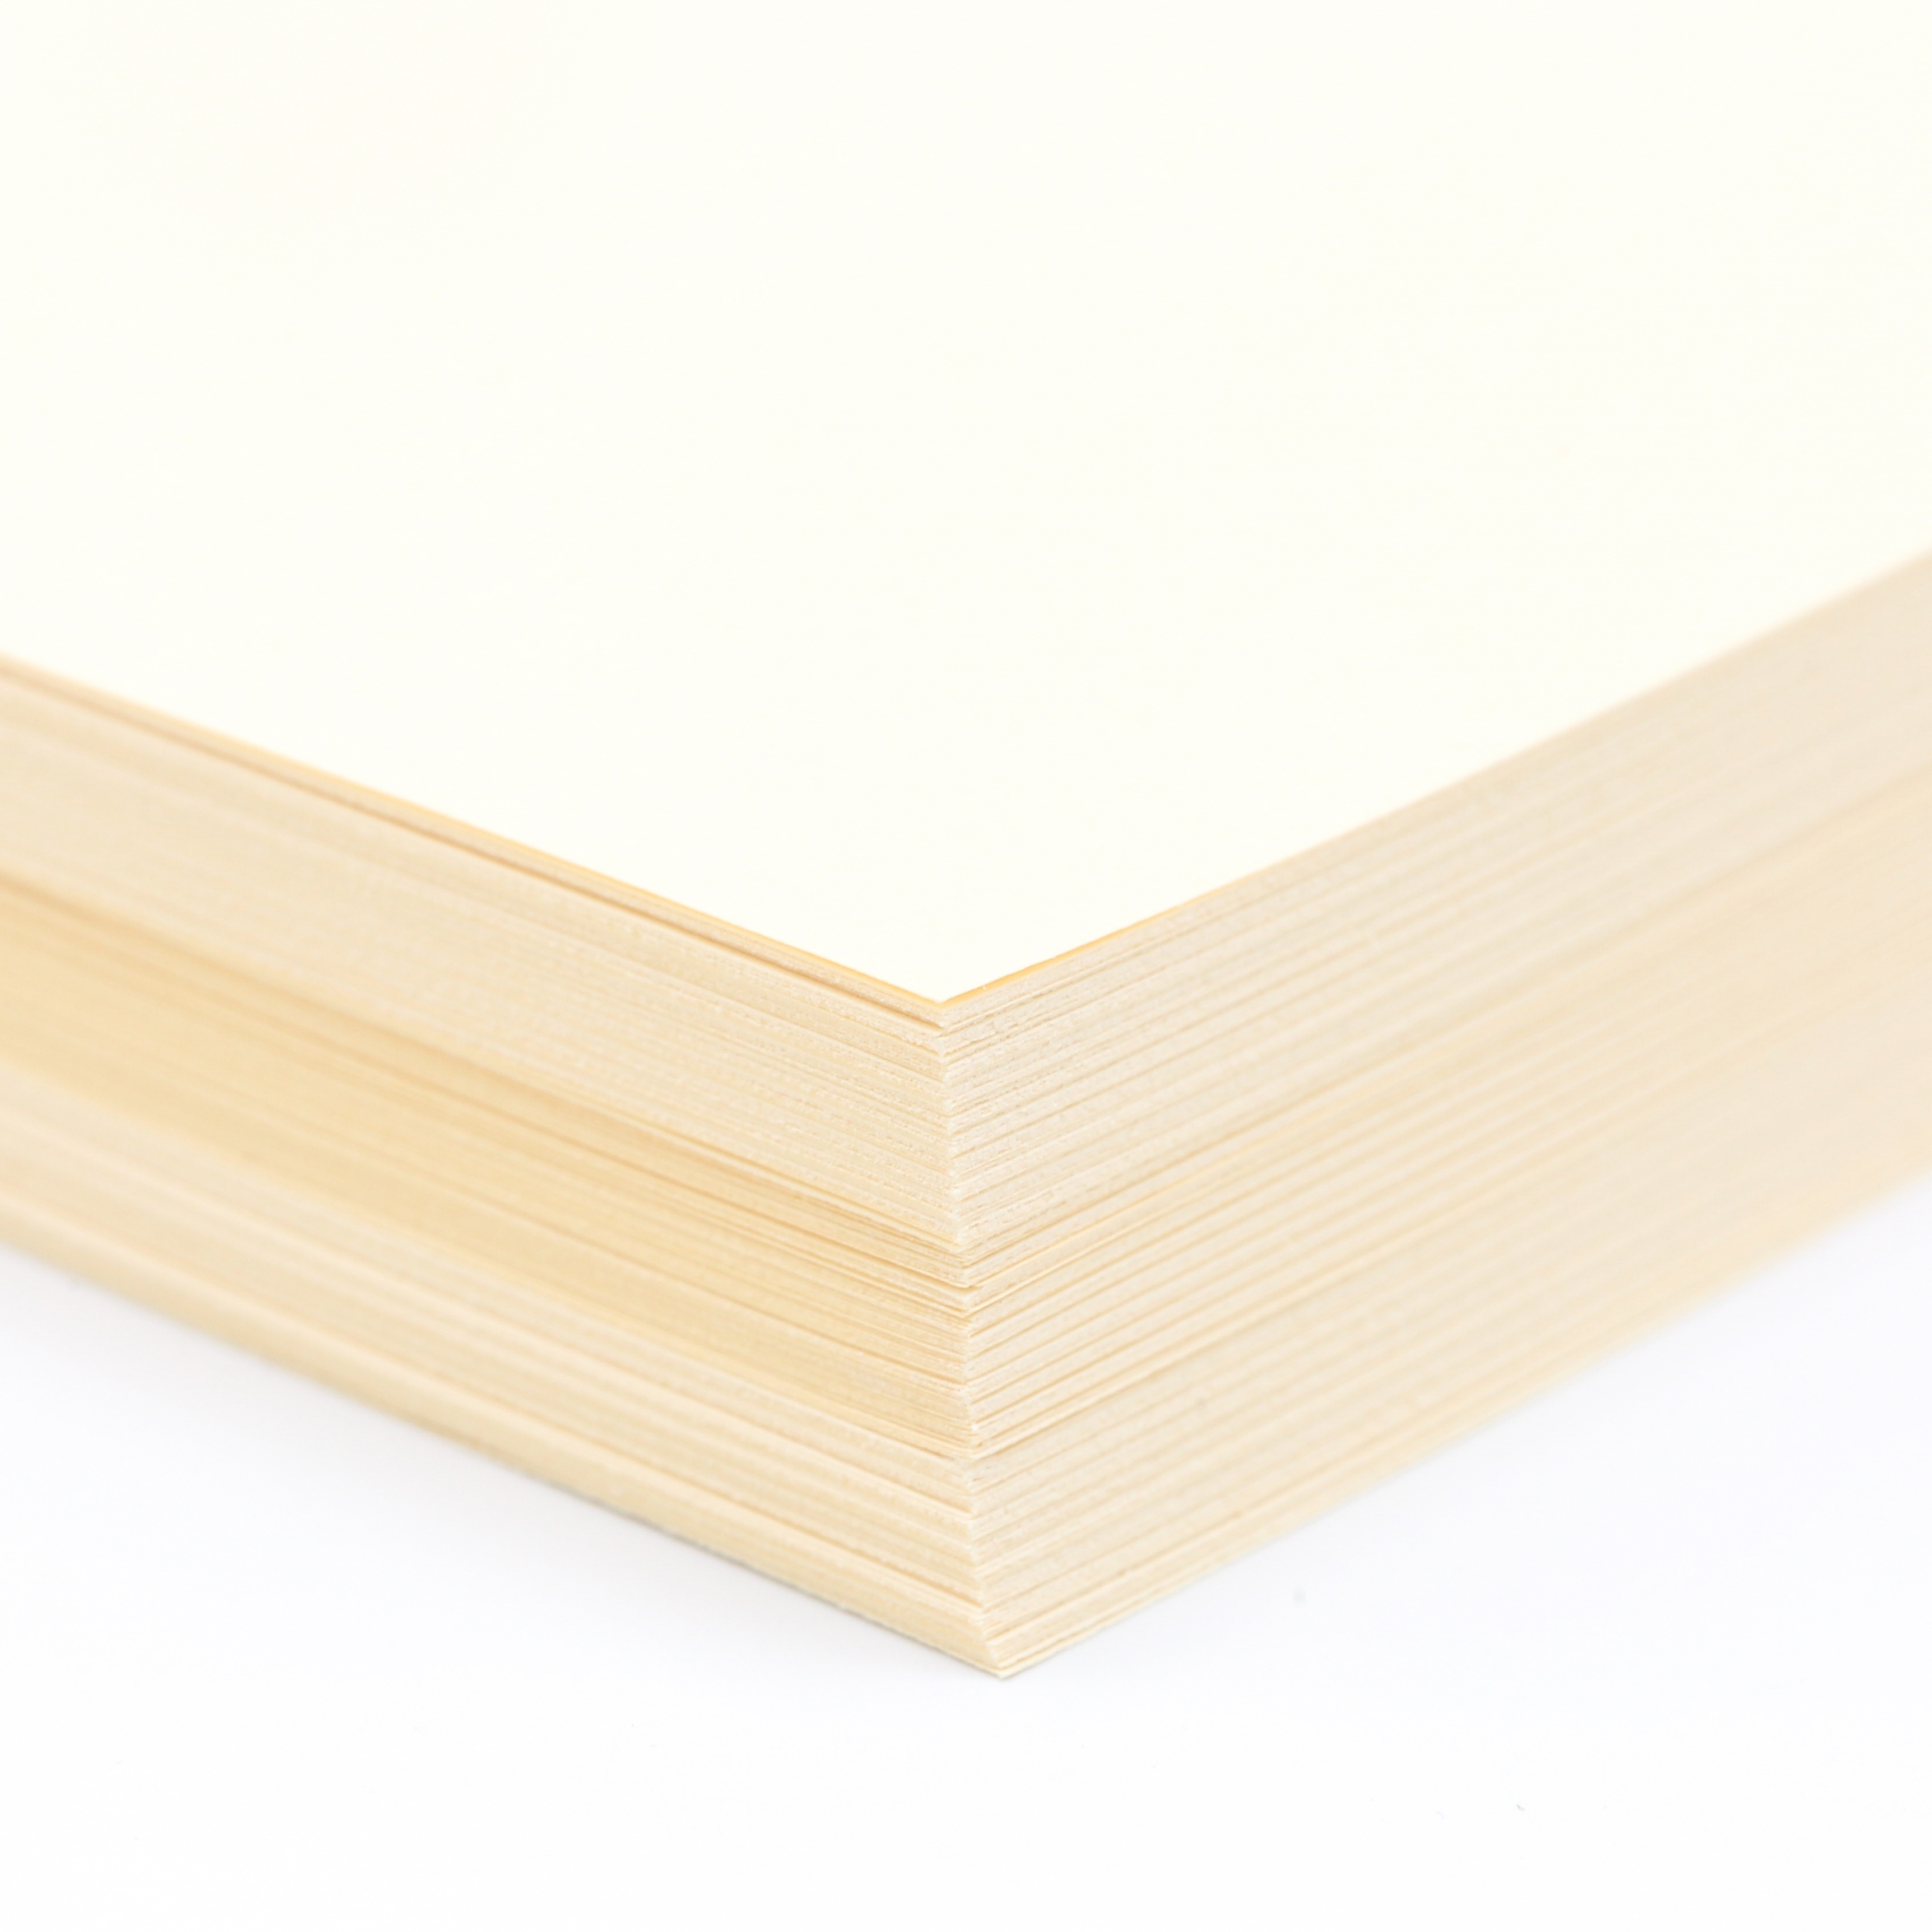 Creme Vellum Bristol 67lb 11x17 Cardstock - Quality Paper Products